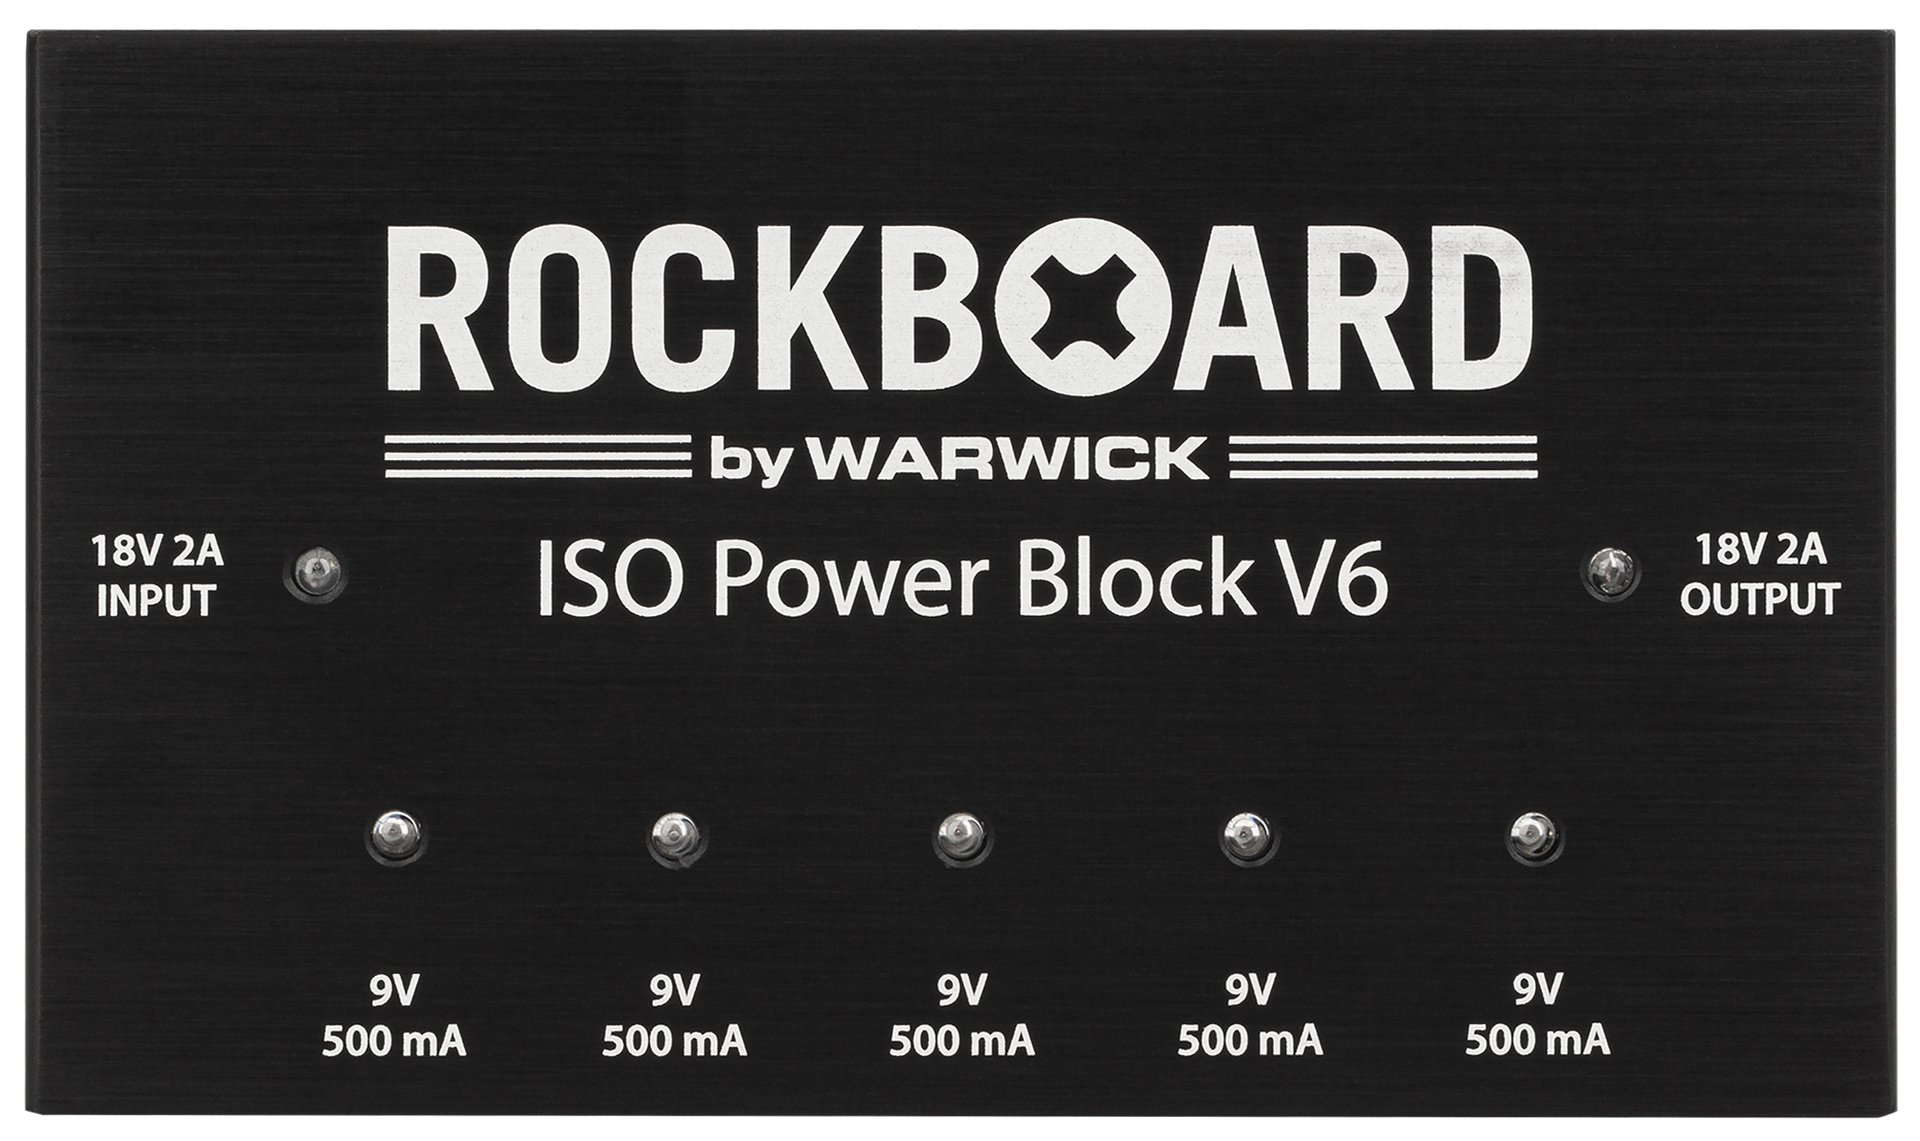 RockBoard ISO Power Block V6 - Isolated Multi Power Supply